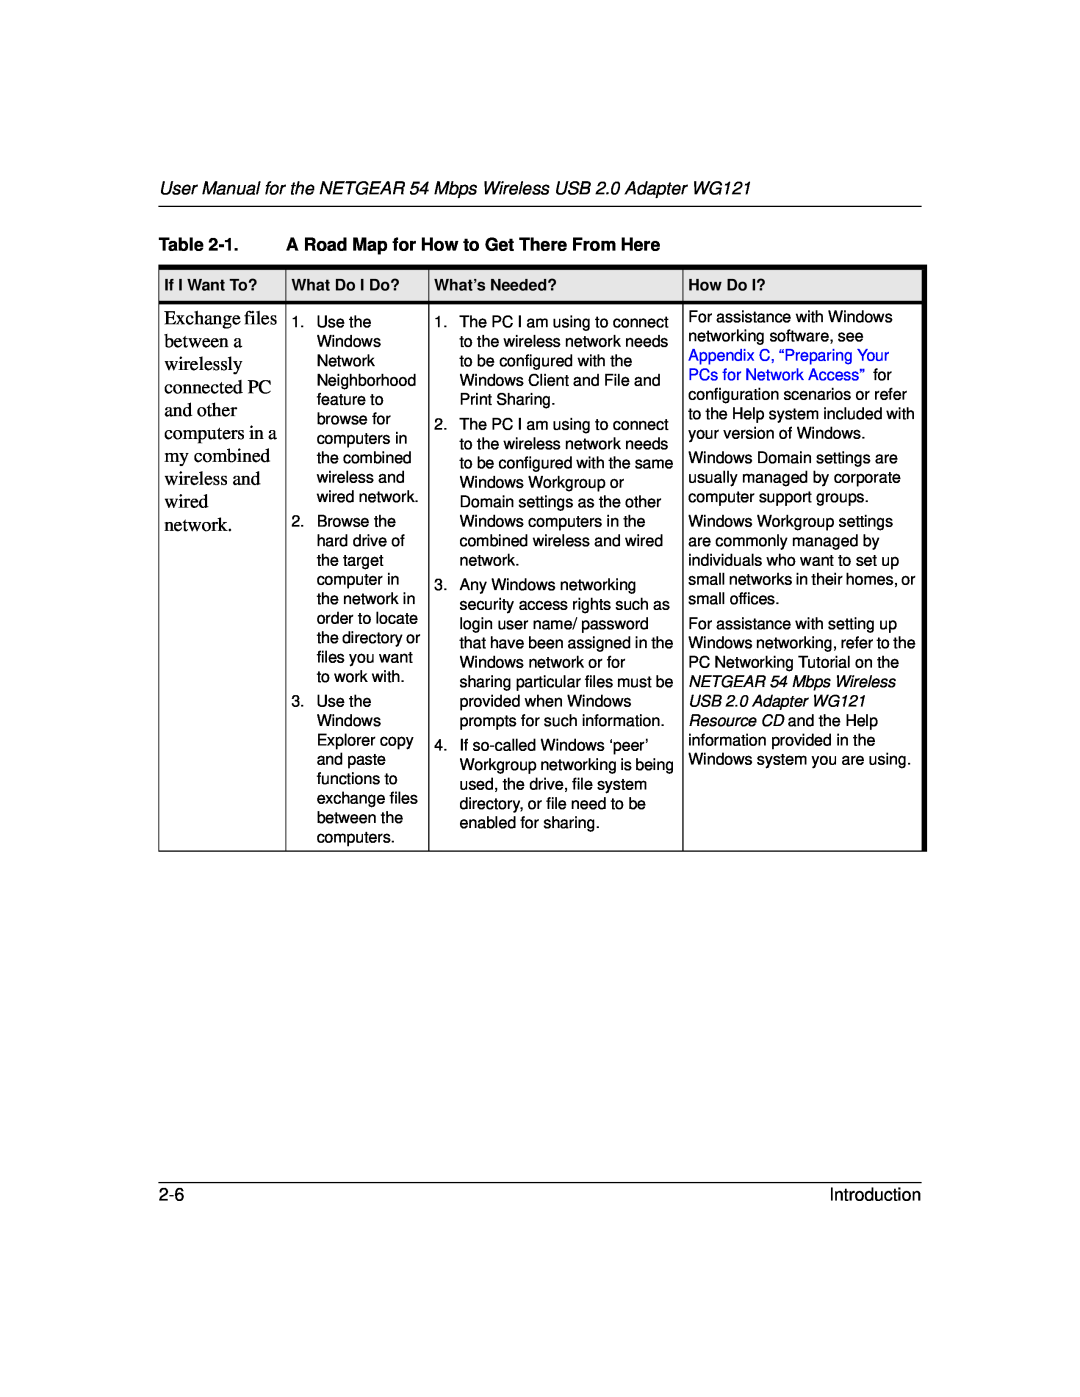 NETGEAR WG121 user manual Exchange files 